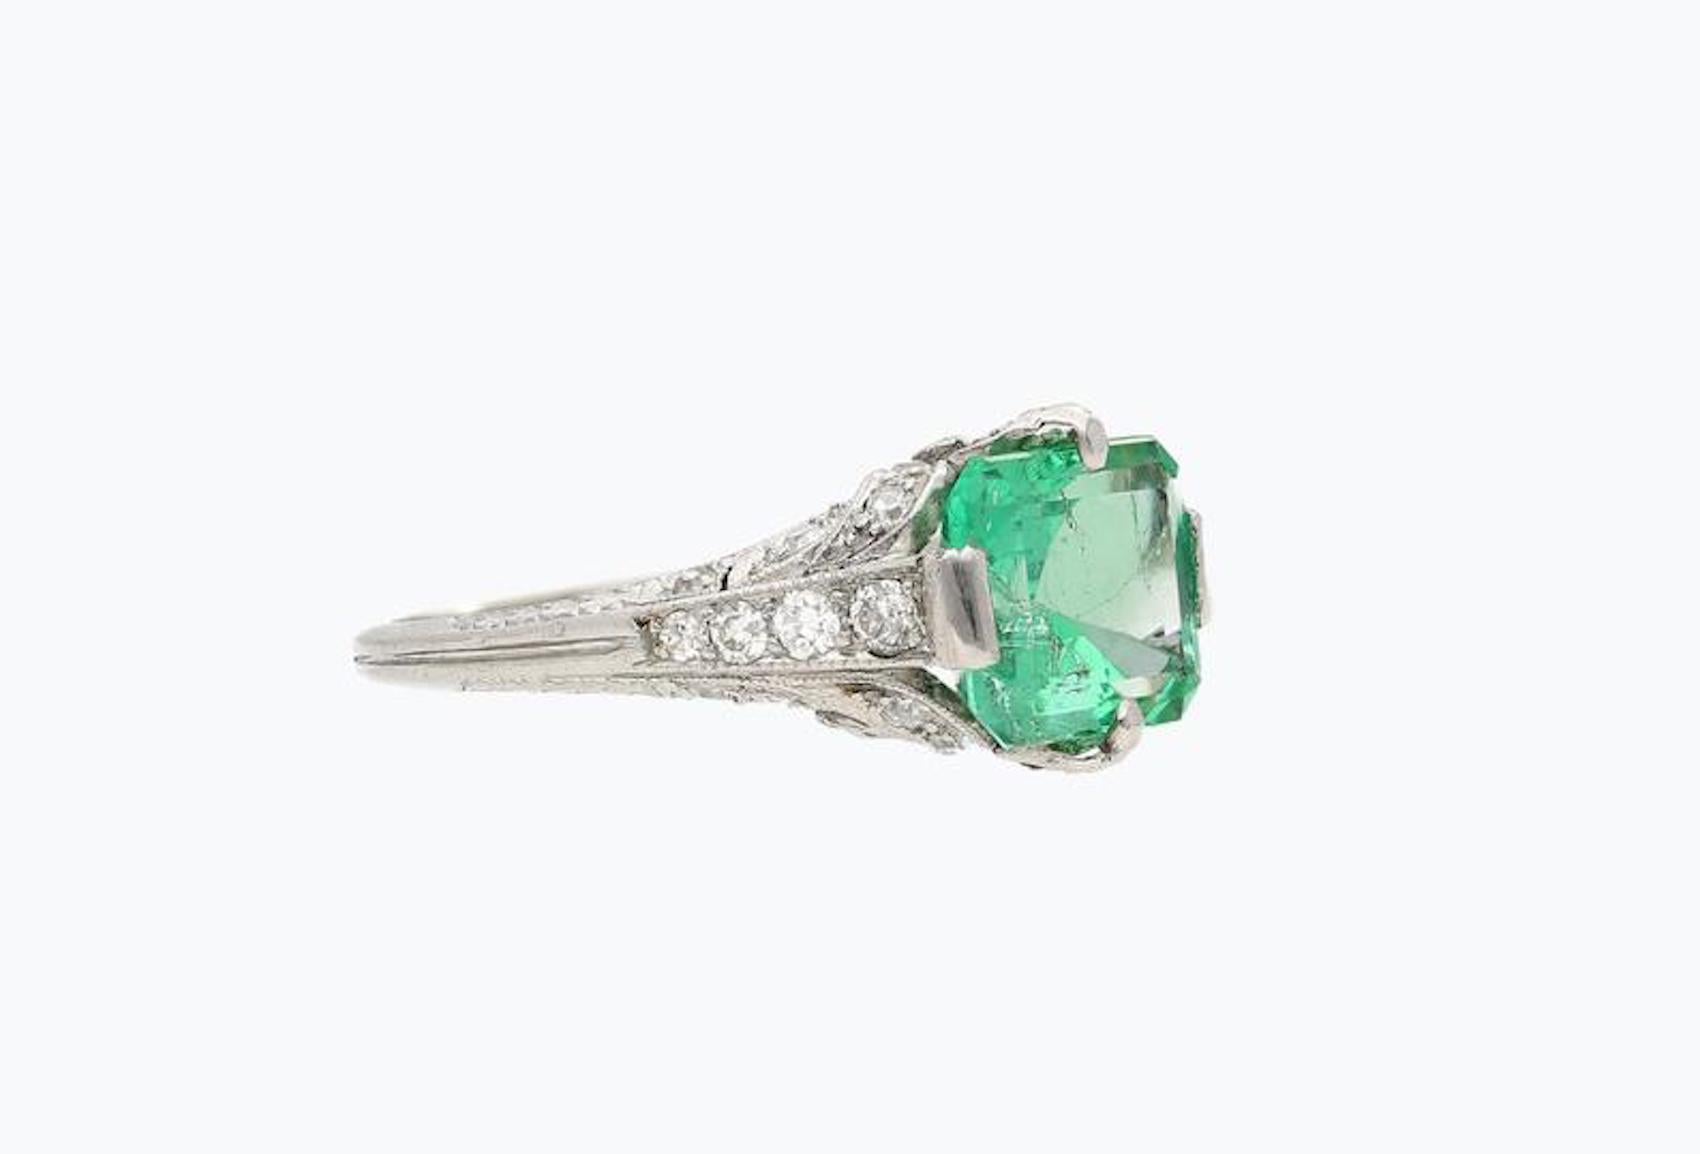 Details:
✔Era: Art Deco
✔Size: 7 US
✔Metal: Platinum
✔Gemstone: Emerald
✔Gem color: Green
✔ Setting: Platinum PT900
✔ Emerald Weight: 2.52 carats
✔ Emerald Cut: Emerald
✔ Emerald Origin: Colombia 
✔ 8 Round, Old cut diamonds
✔ Diamonds: 8 Old-Mine